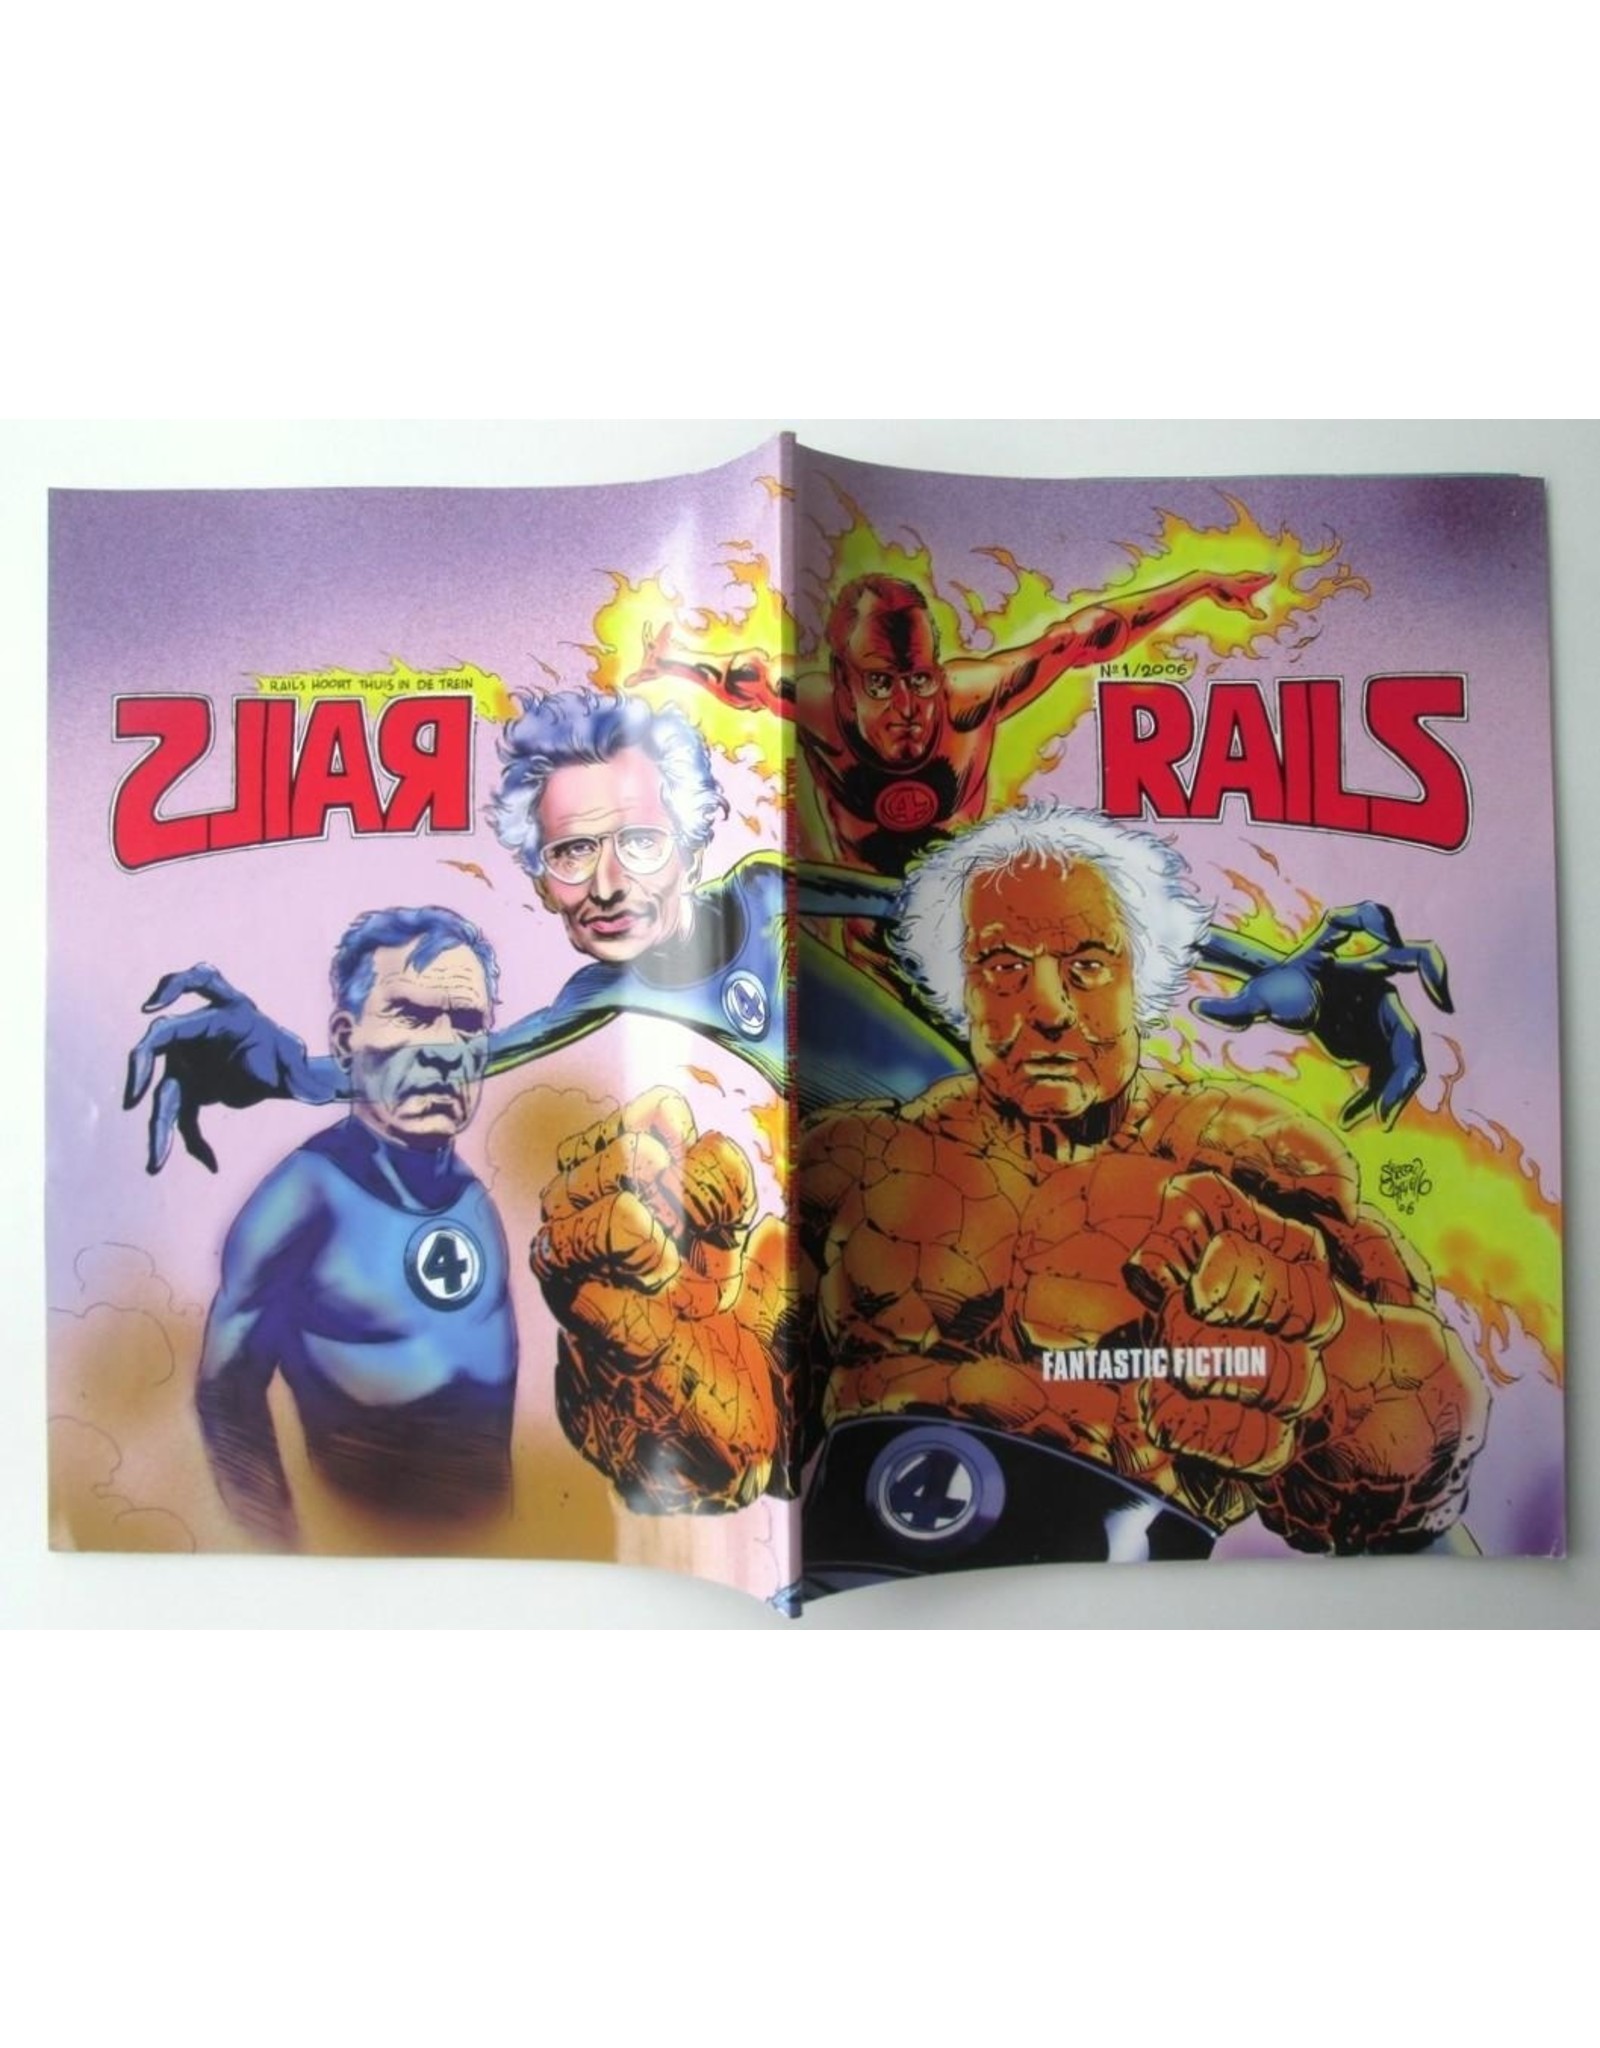 Jan Wolkers als The Thing van The Fantastic Four [op de cover van] RAILS [maandblad] Jrg. 55 Nr. 1 Februari 2006